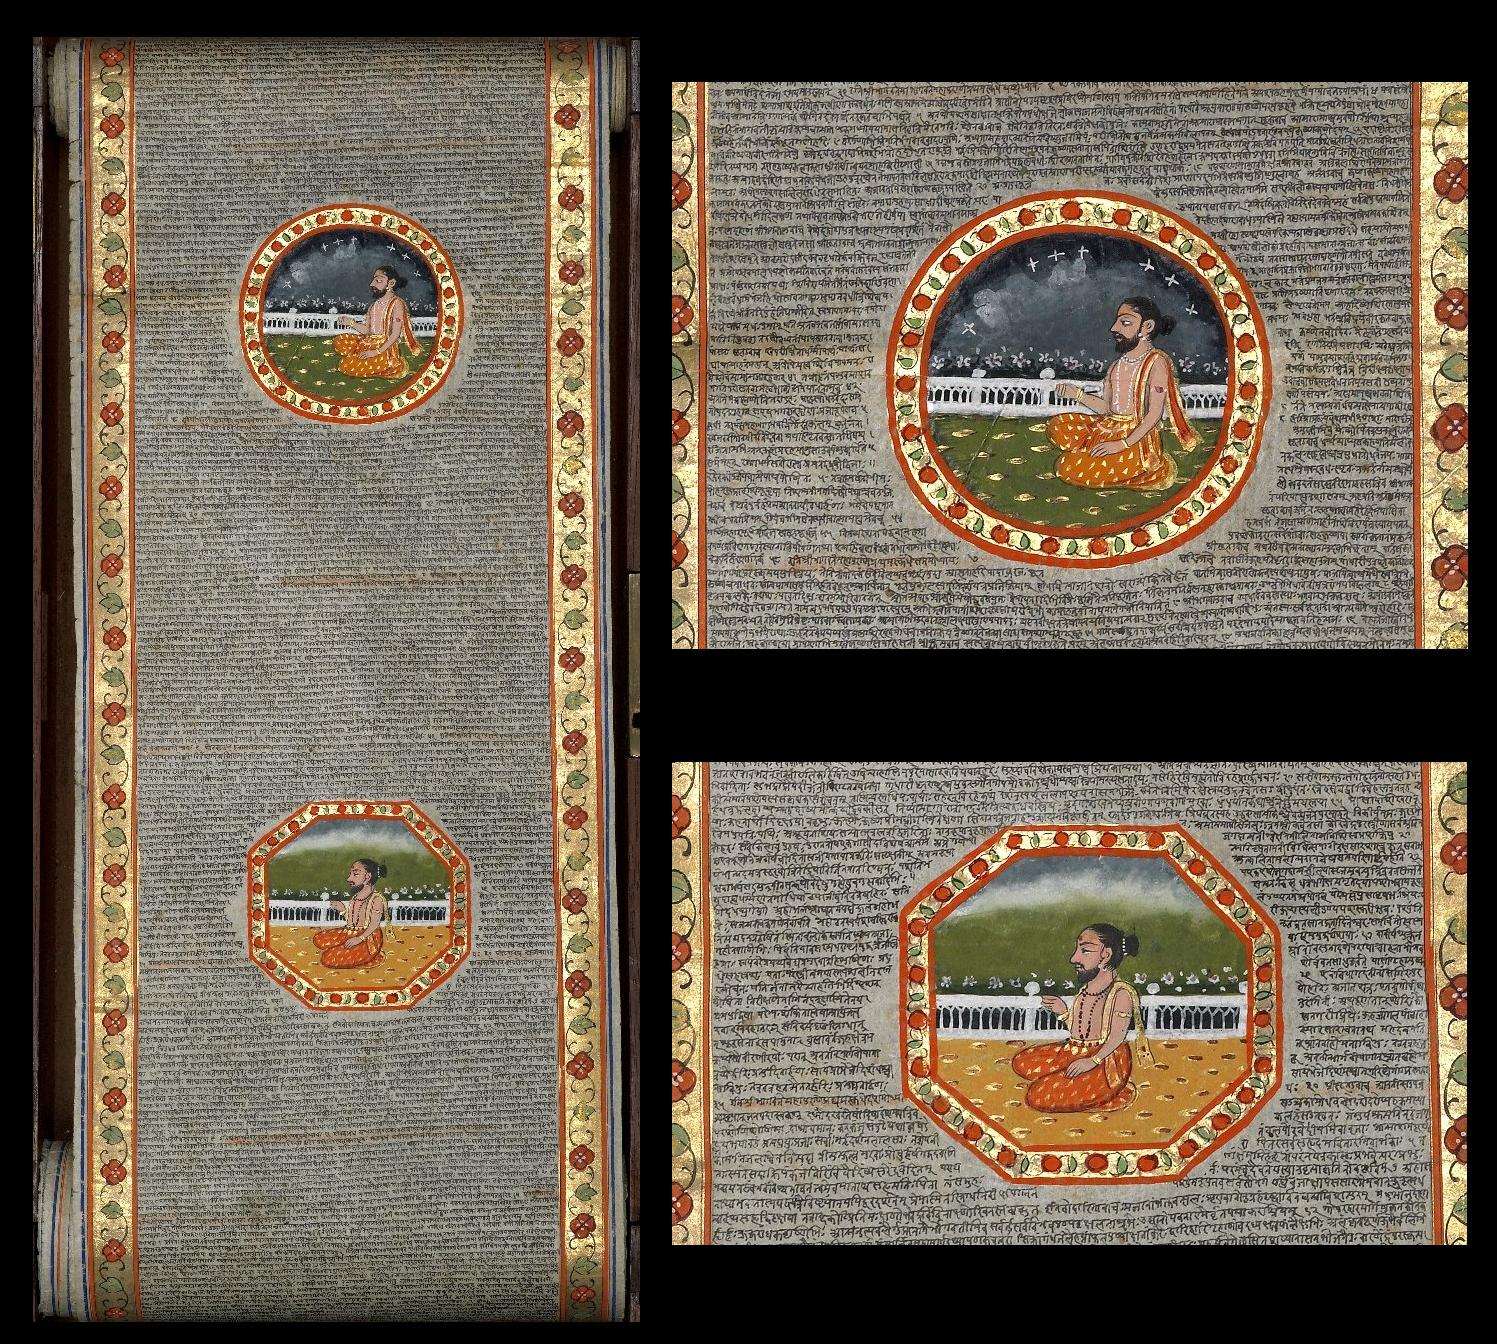 Bhagavata Purana illuminated scroll from 1600s